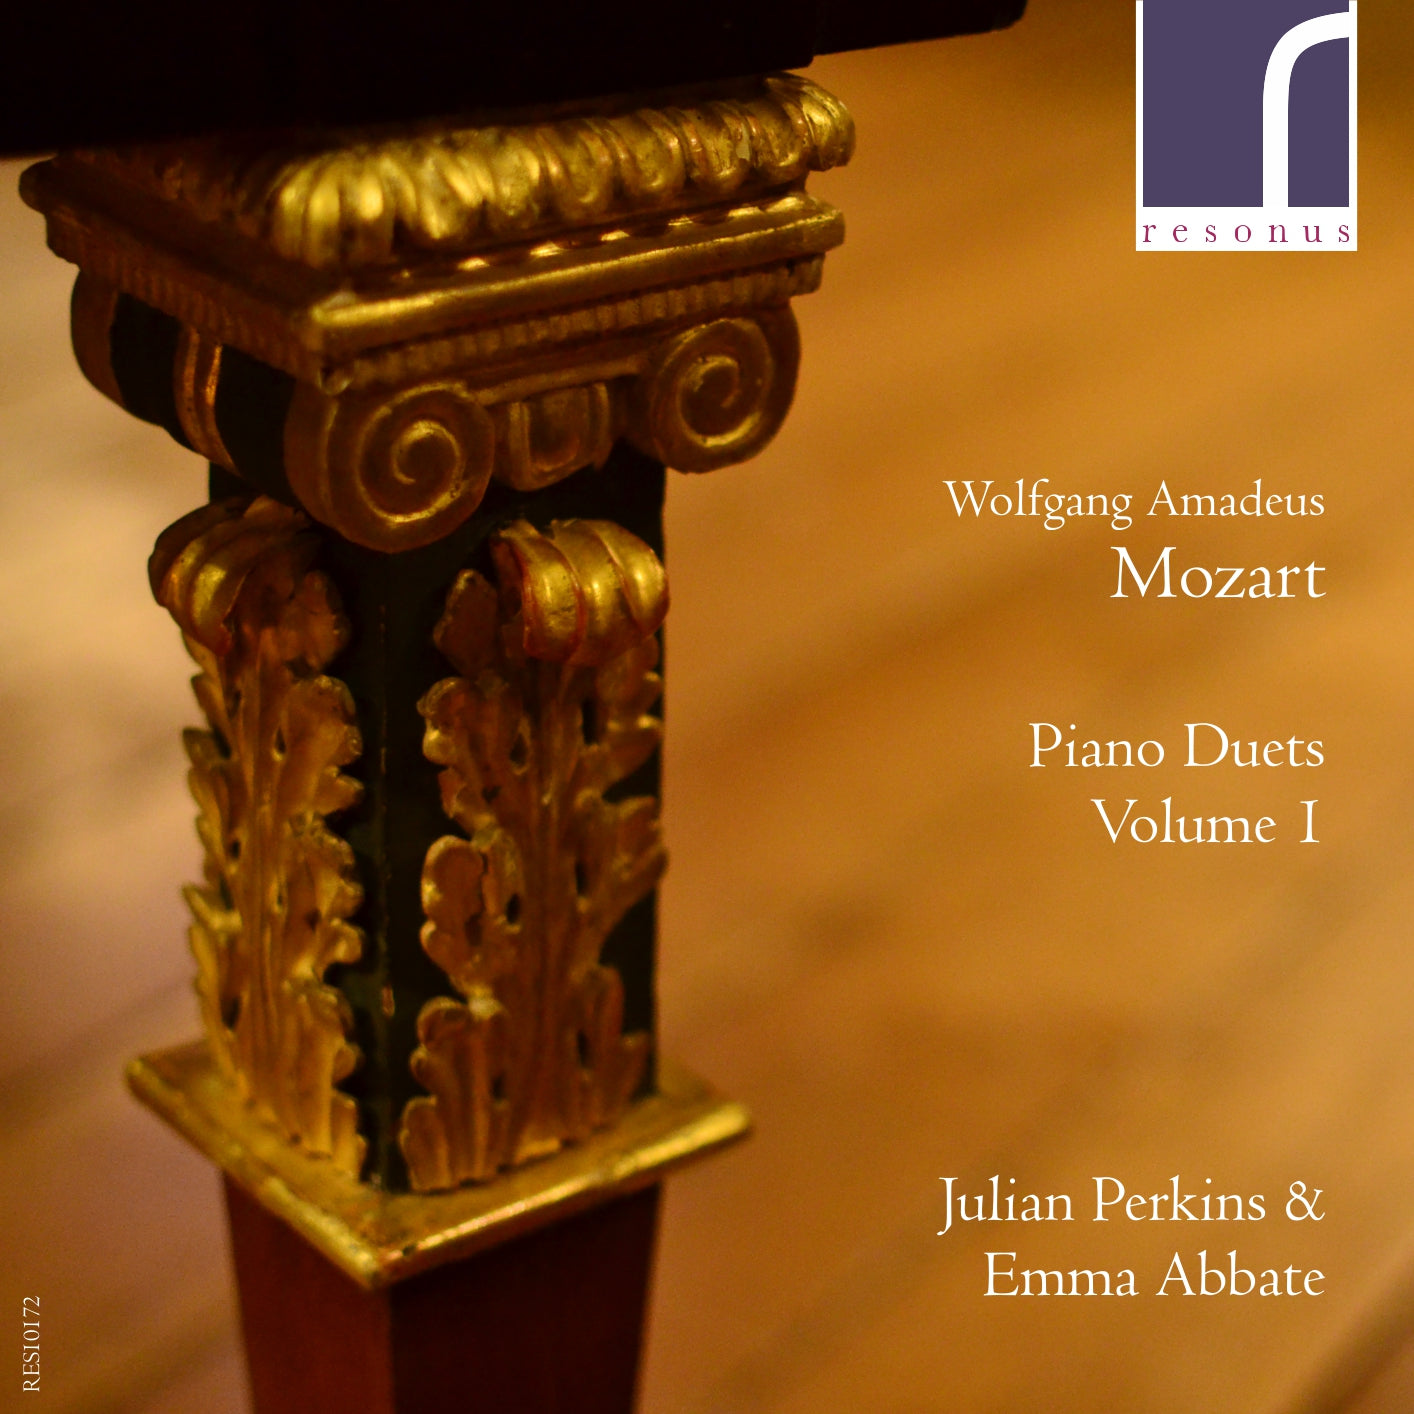 Wolfgang Amadeus Mozart: Piano Duets, Volume 1